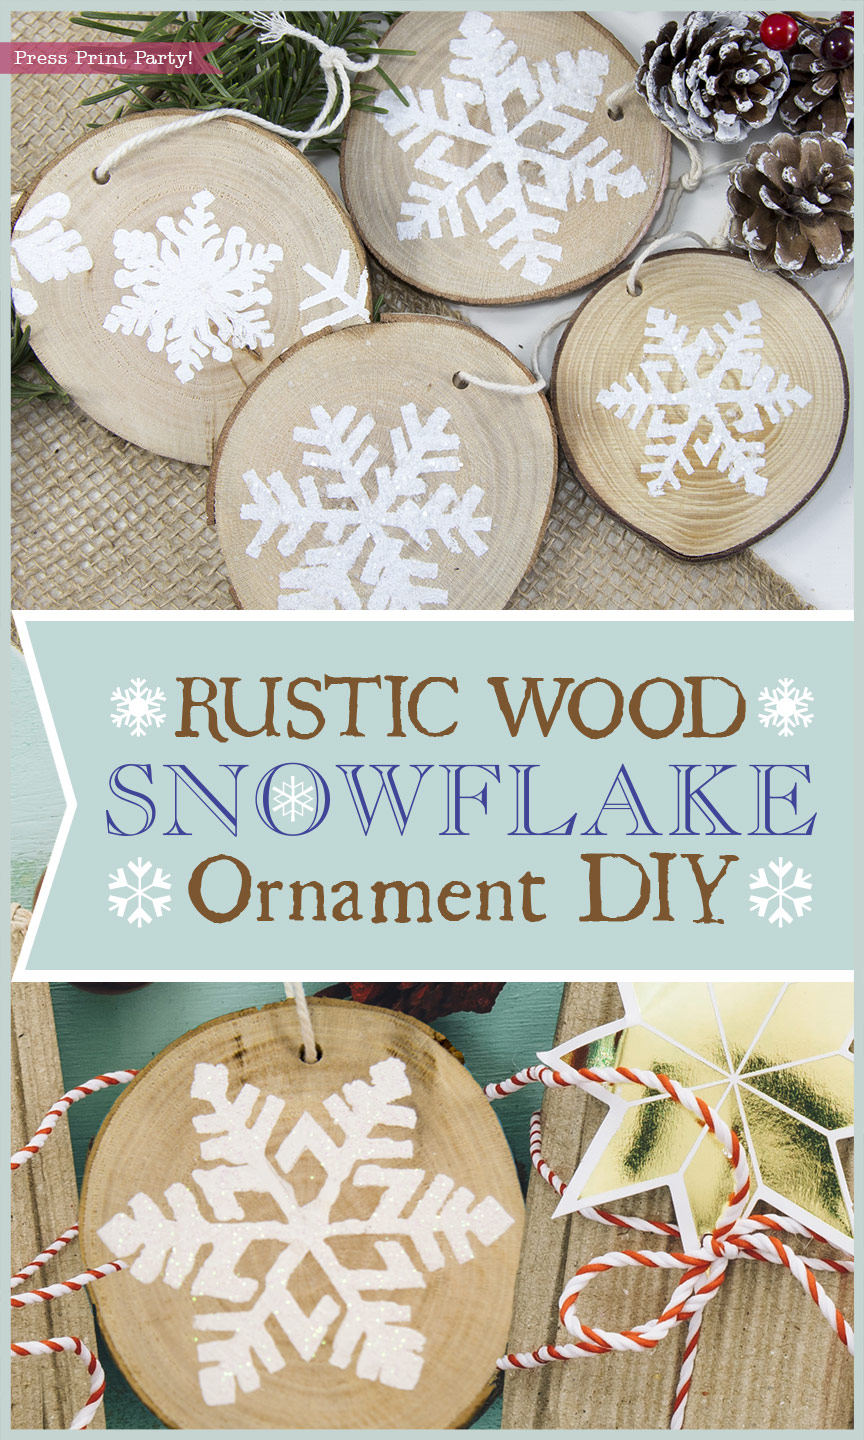 Rustic Wood Snowflake Ornament DIY - By Press Print Party!